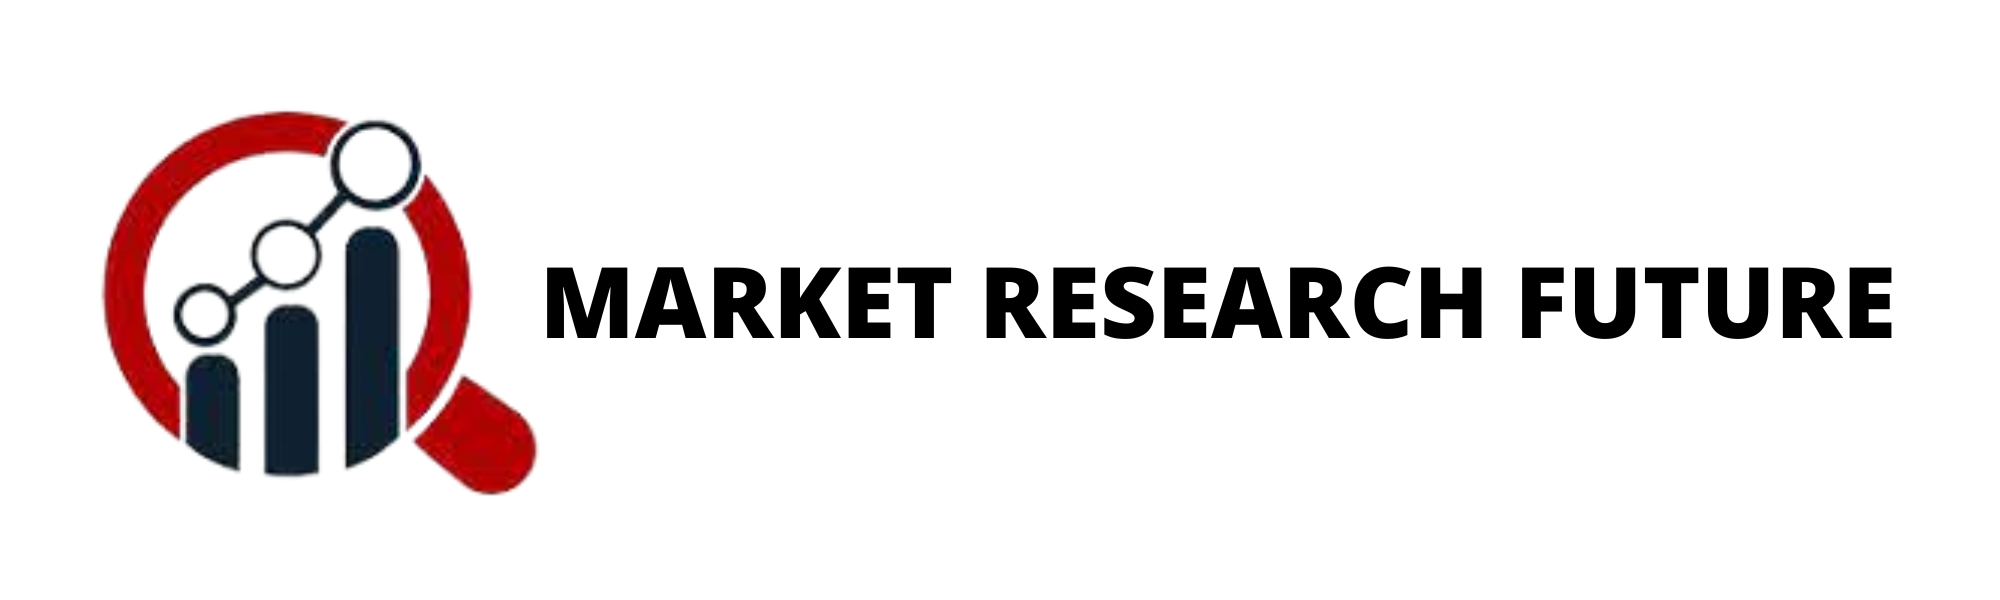 Dimethyl Ether Market Demand, Analysis, Revenue Share, Company...